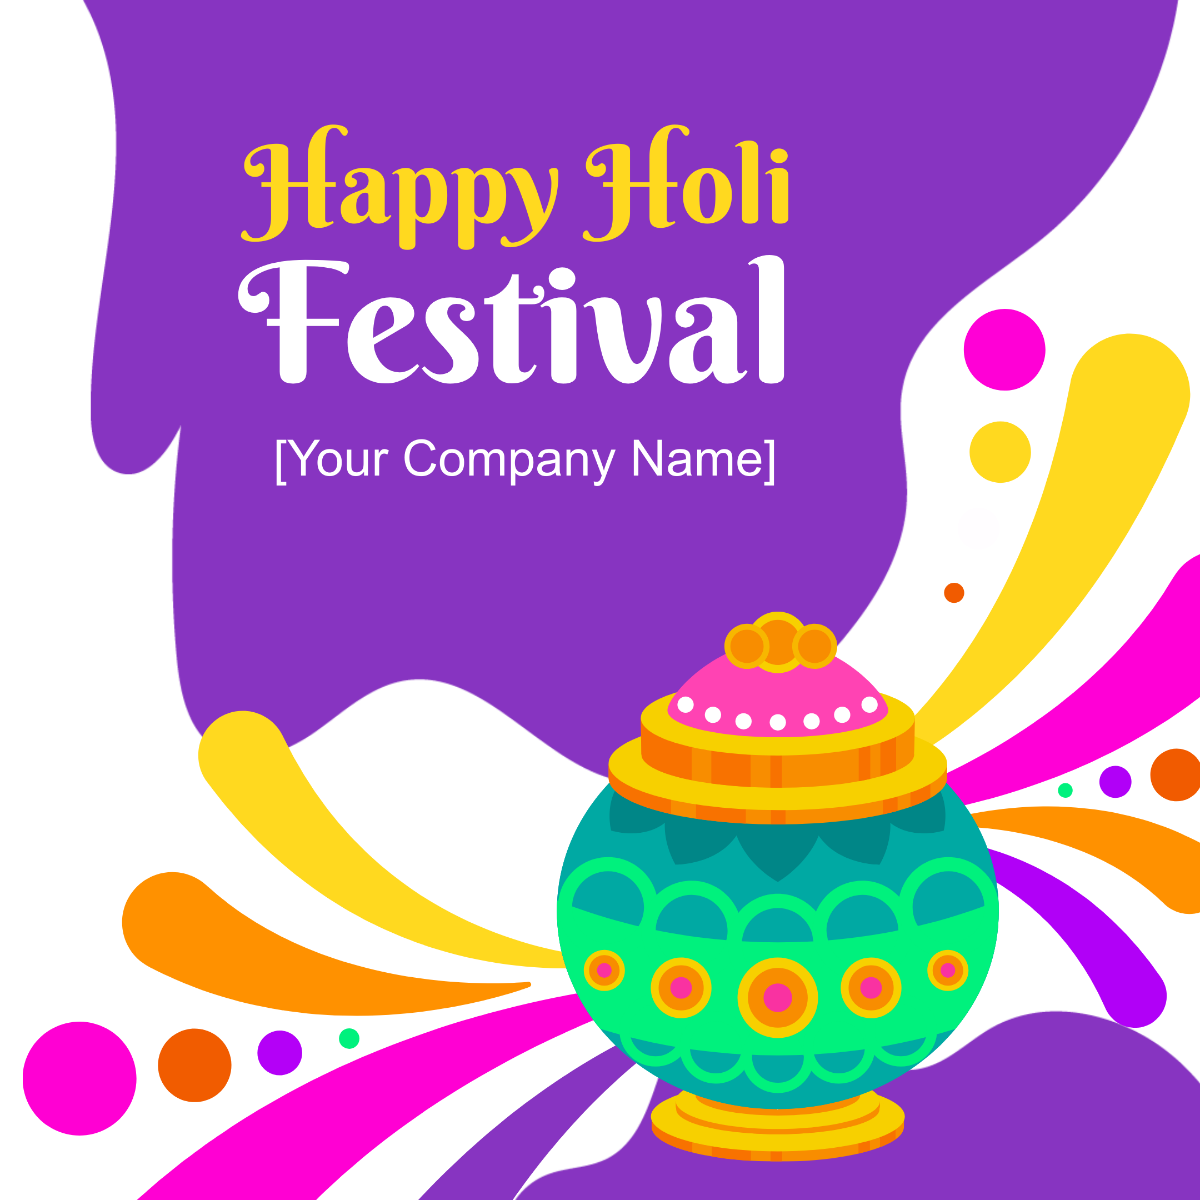 Happy Holi Festival Facebook Post